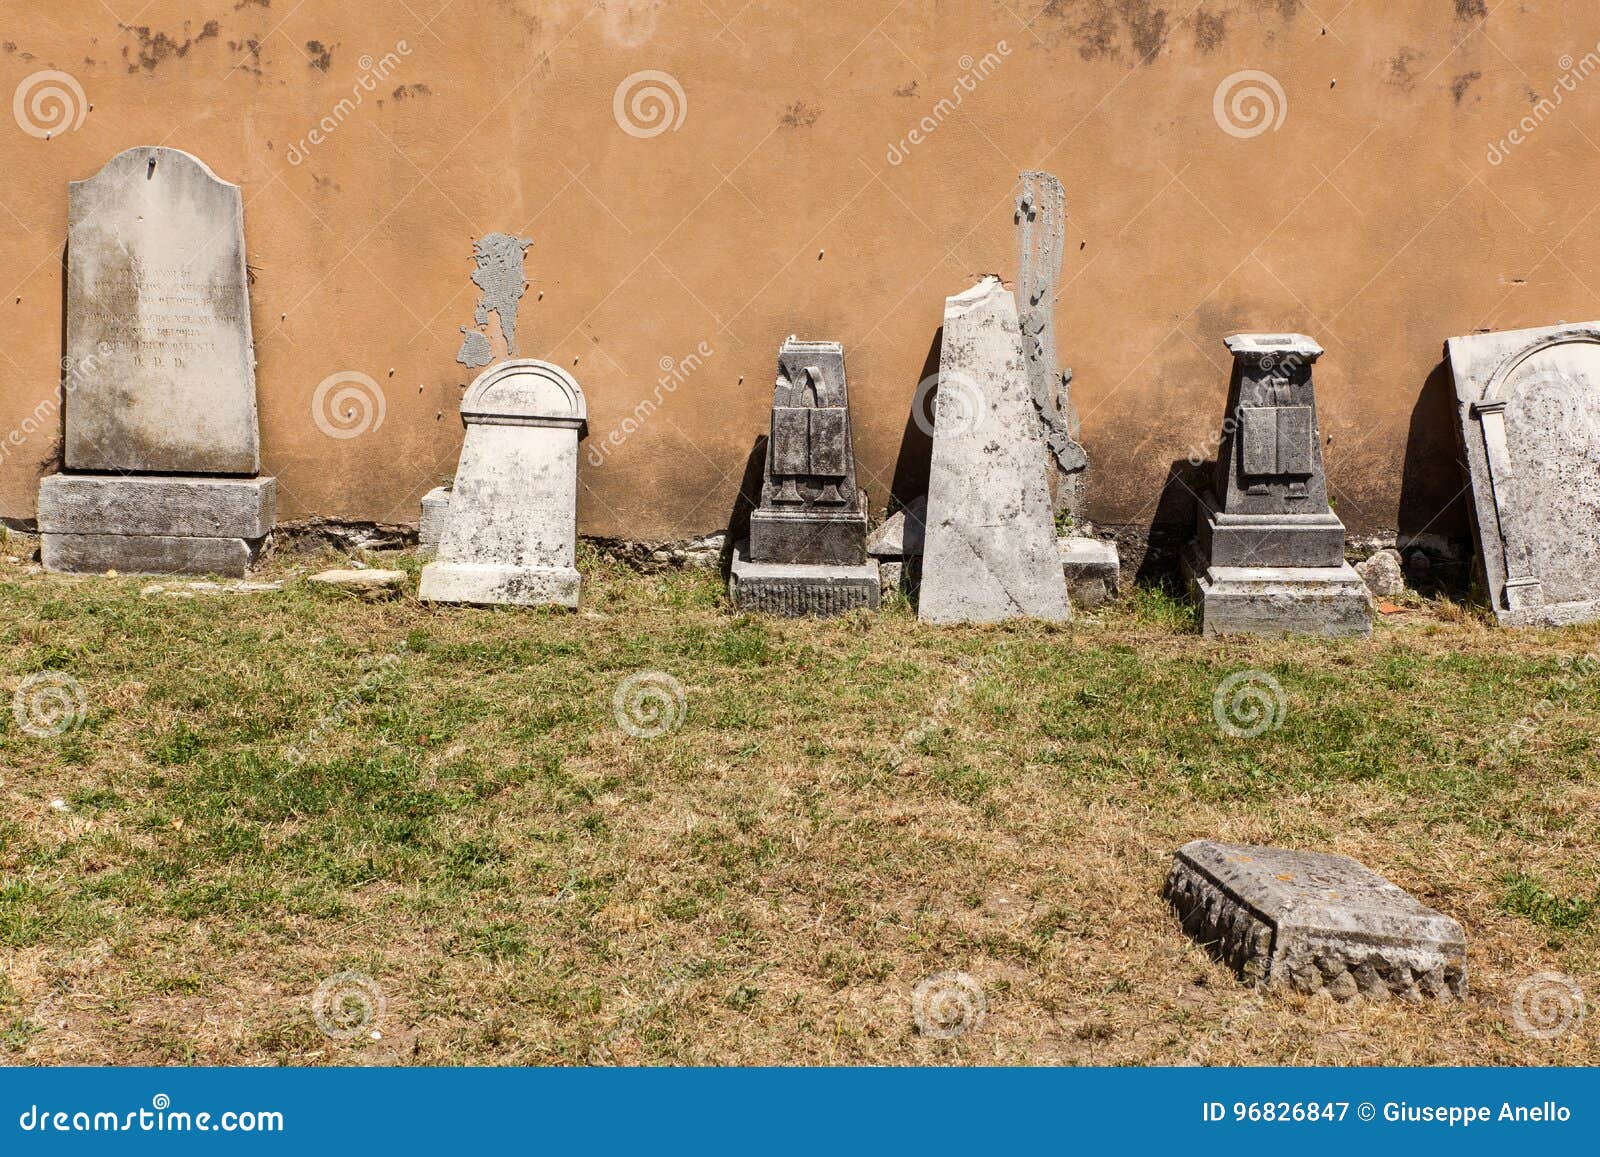 old italians cemetery in buje, croatia